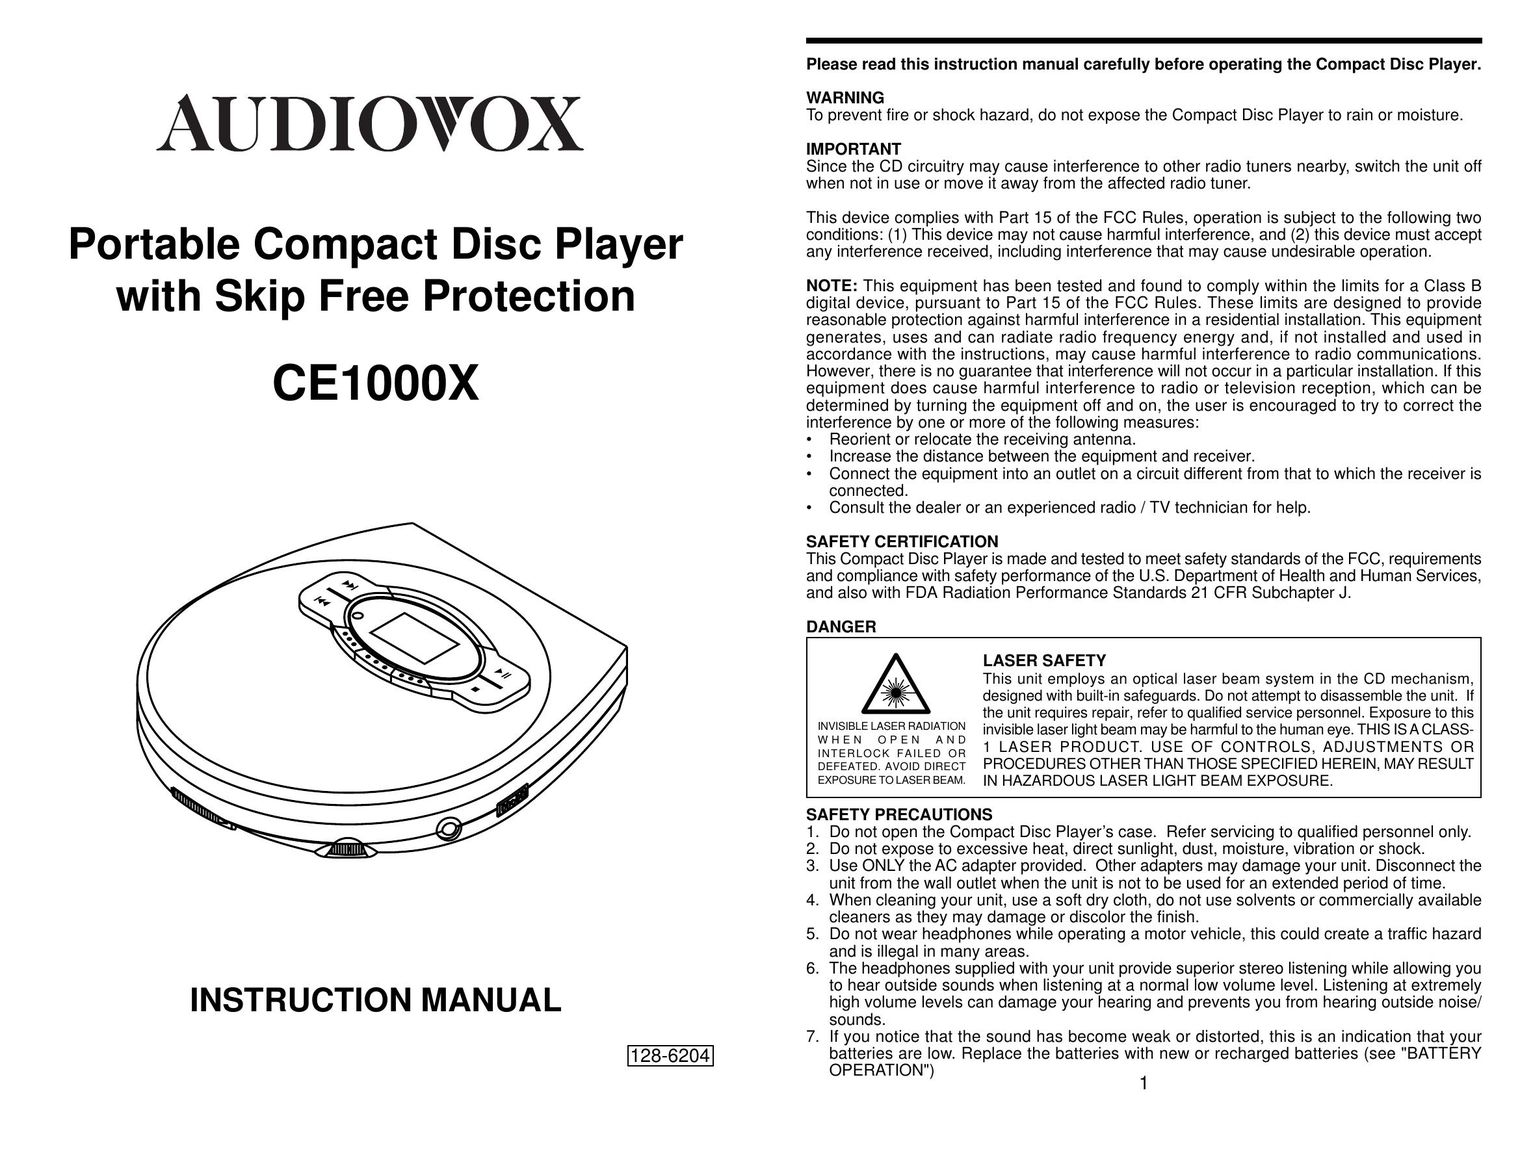 Audiovox CE1000X Portable CD Player User Manual